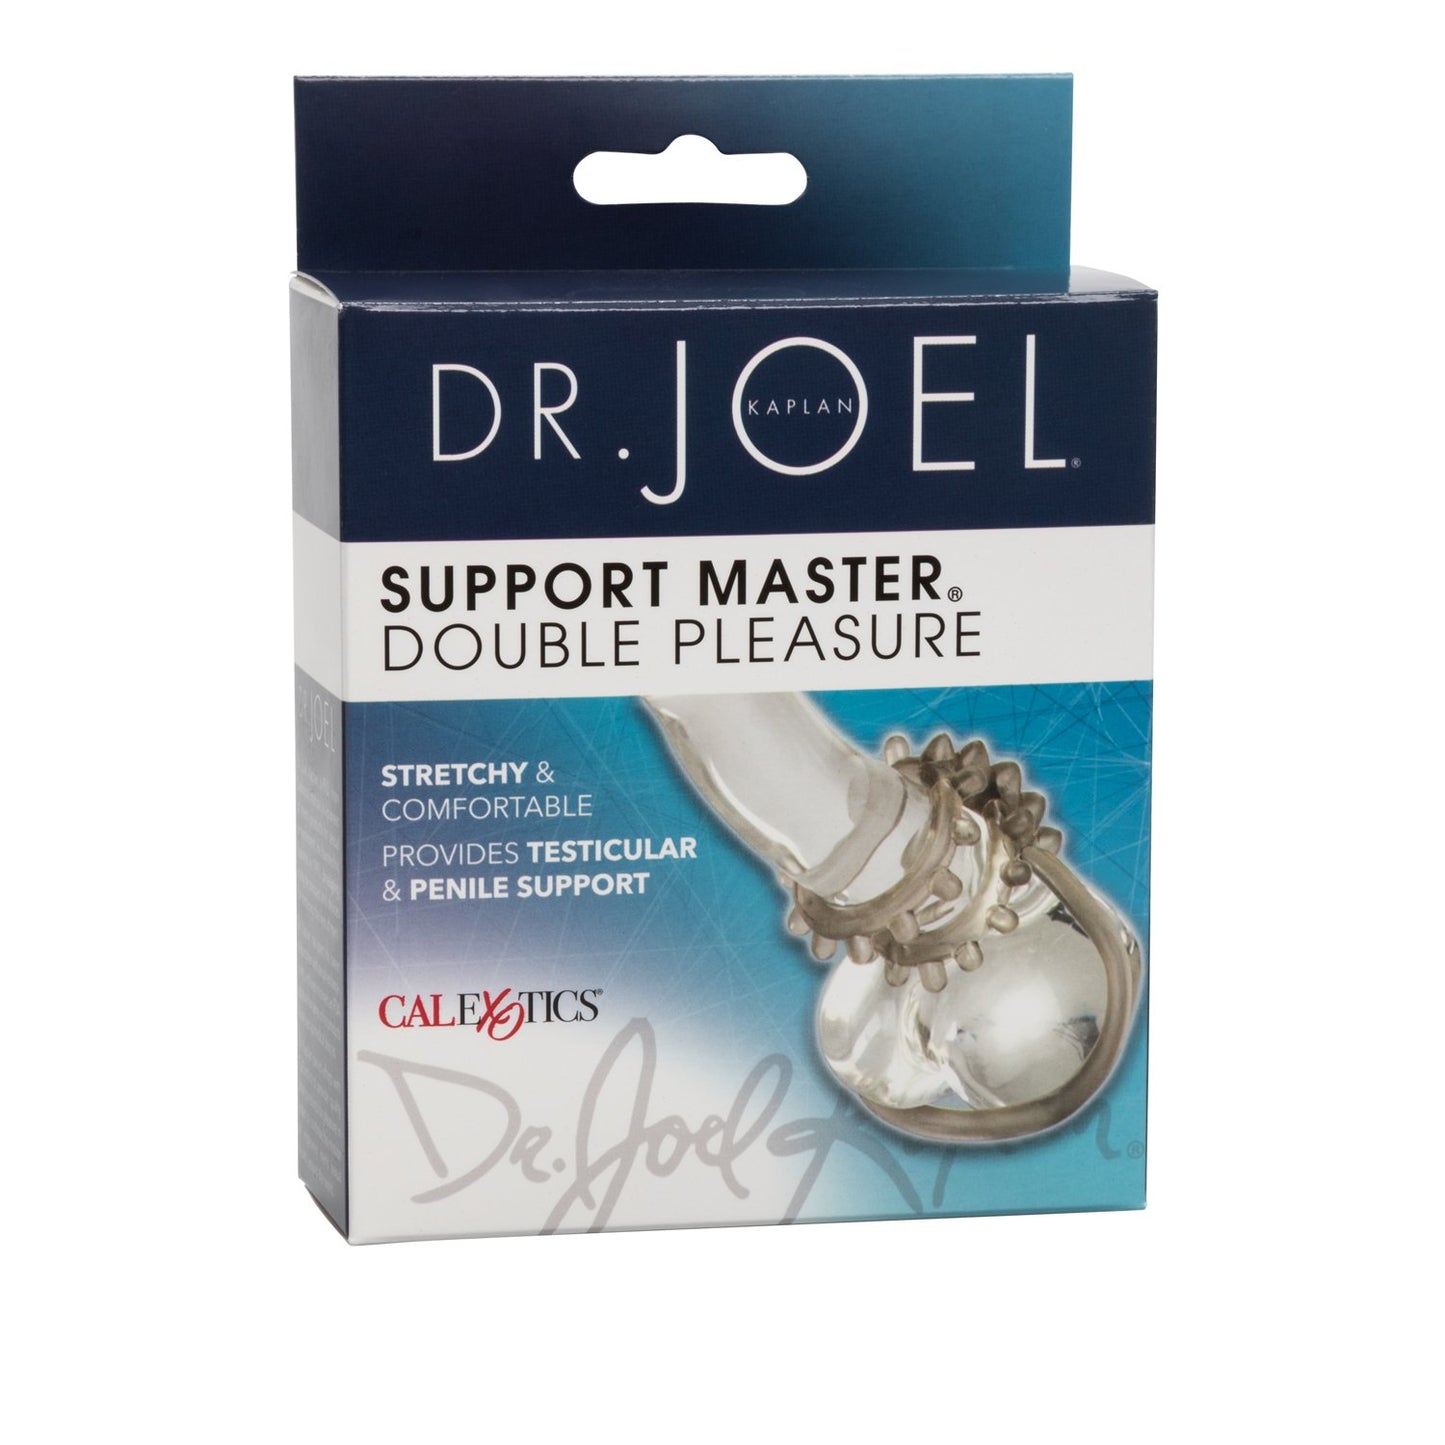 Dr. Joel Kaplan Support Master Double Pleasure